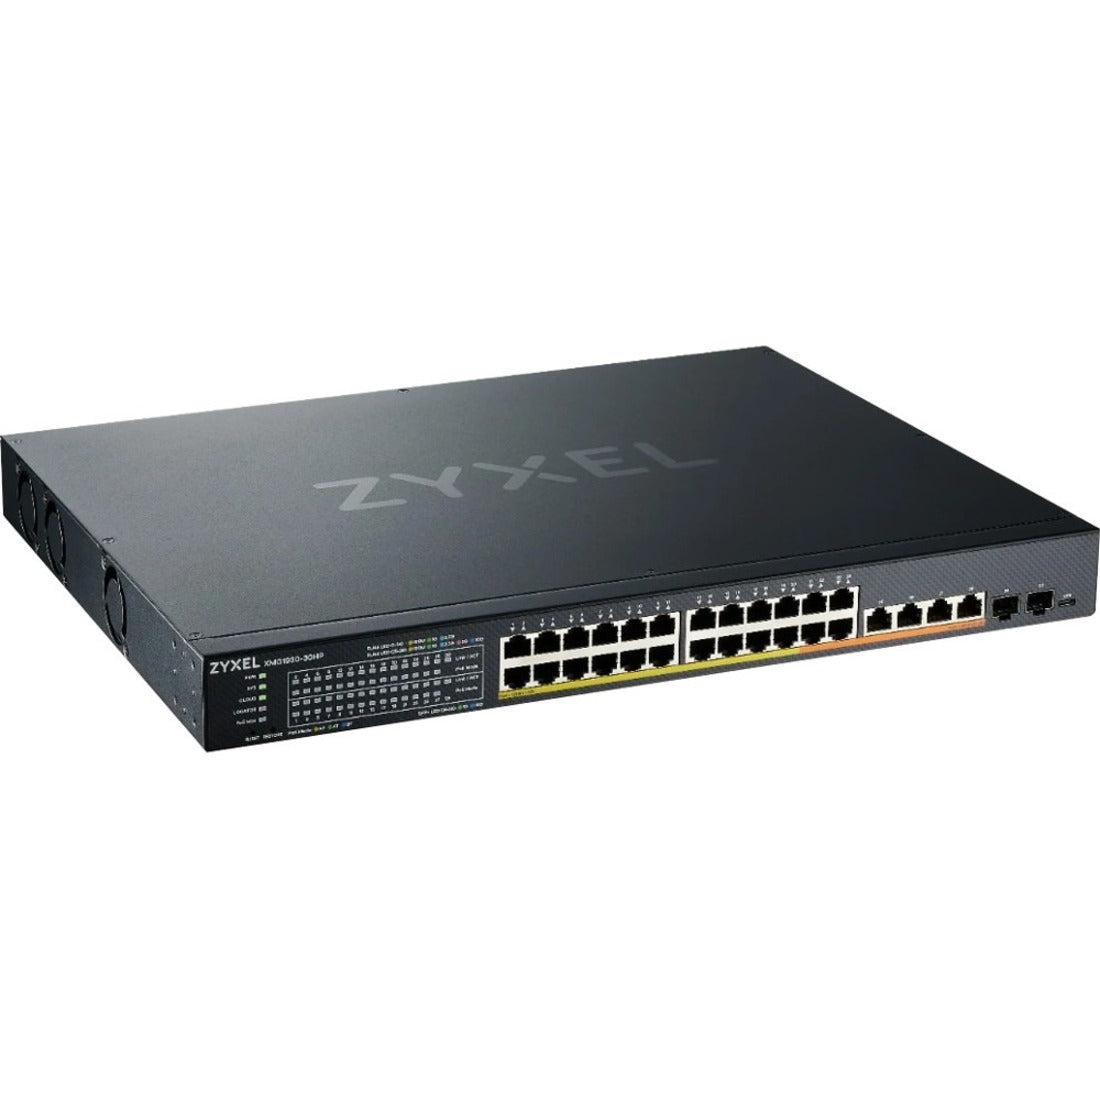 ZYXEL XMG1930-30HP Ethernet Switch, 28 Ports, 10G/2.5G Gigabit Ethernet, PoE++, Rack-Mountable